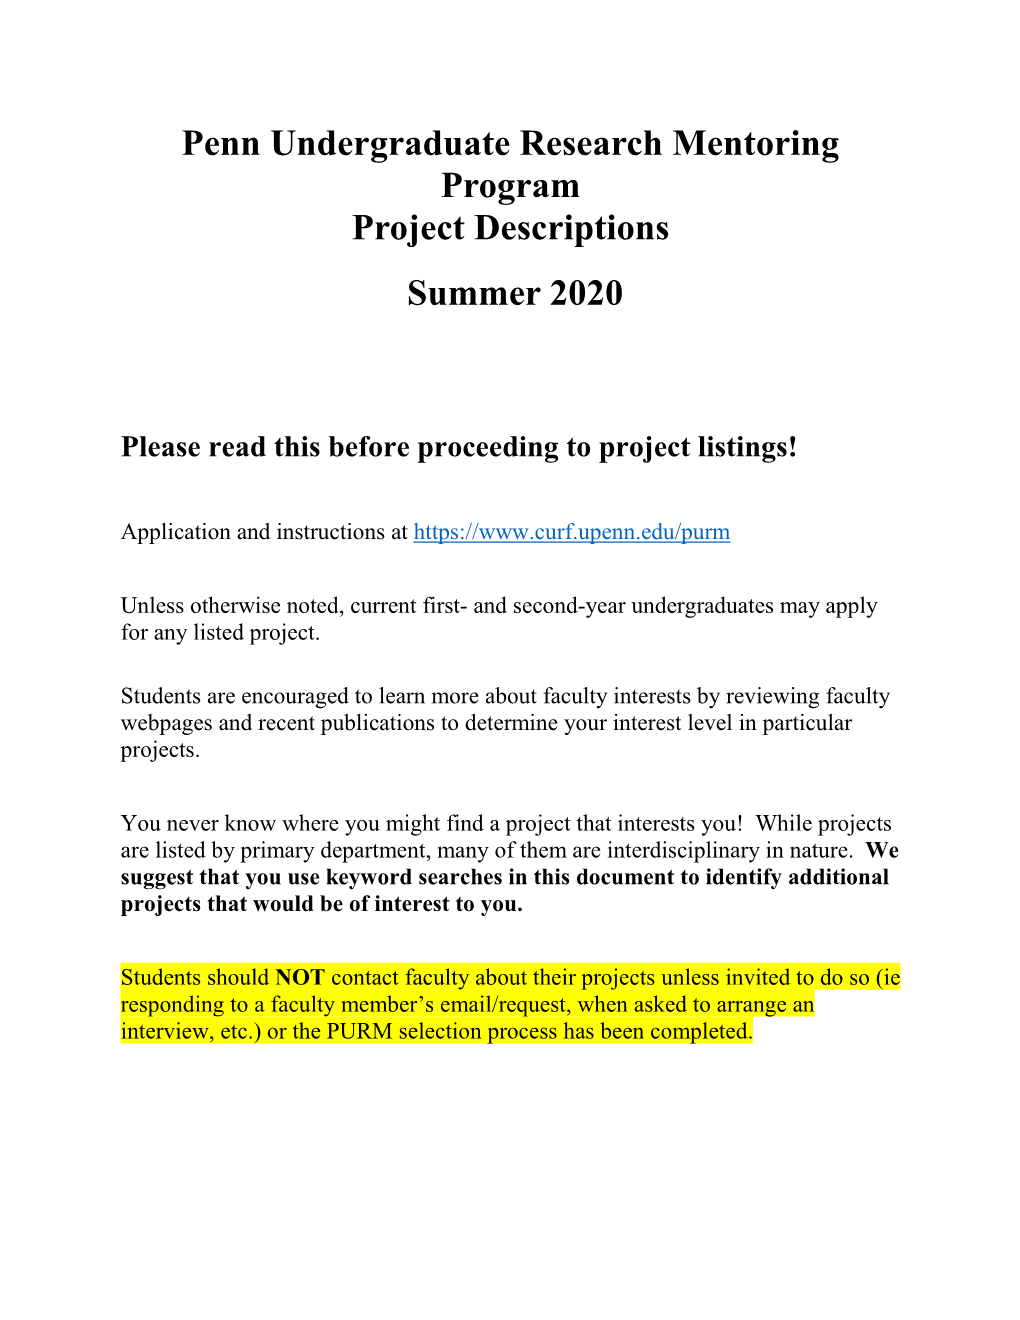 Penn Undergraduate Research Mentoring Program Project Descriptions Summer 2020